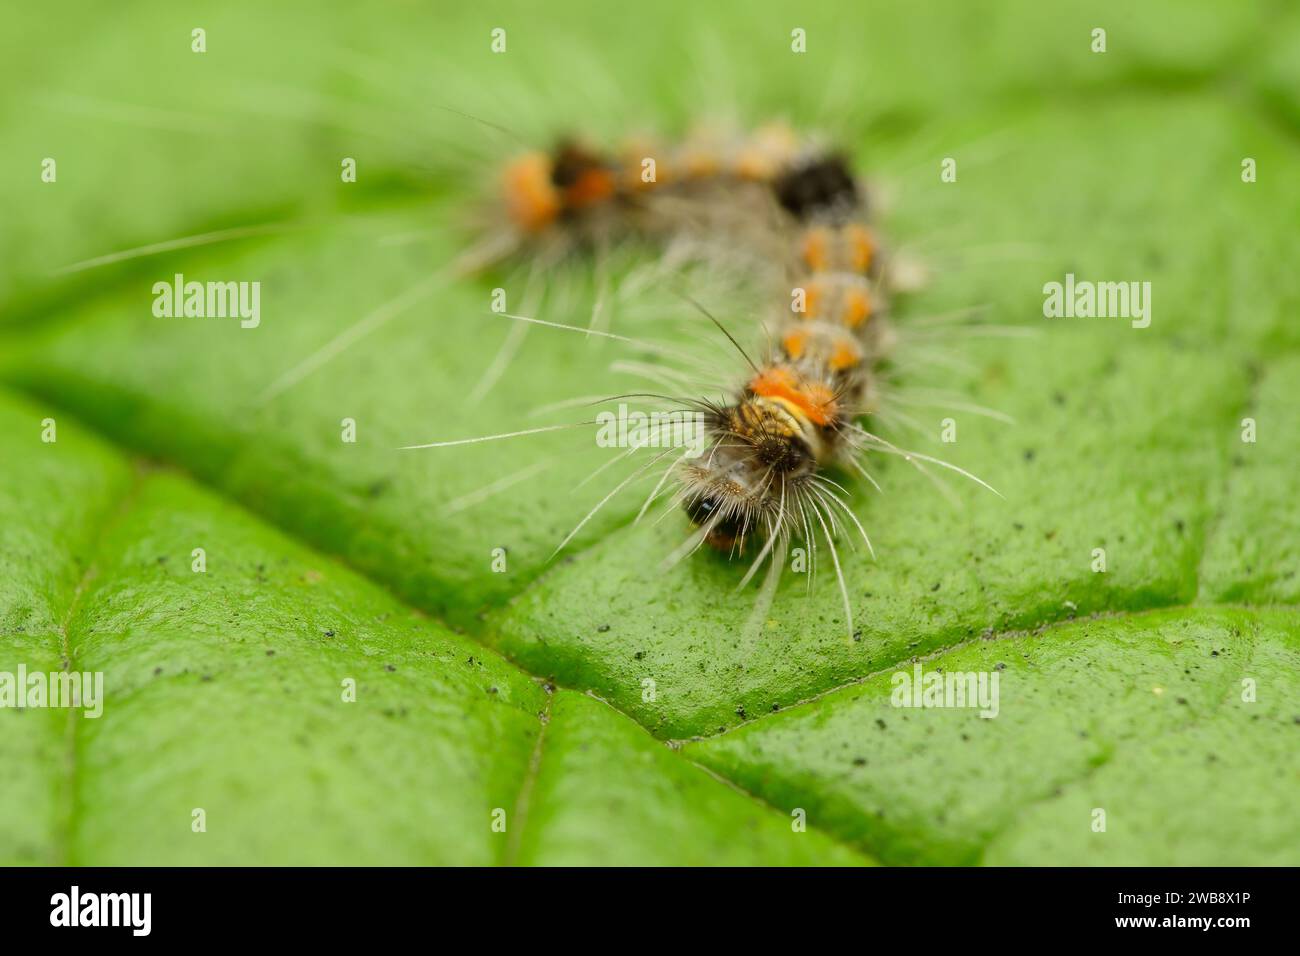 Macro of Rusty Tussock Moth Caterpillar (Orgyia antiqua) on a green leaf. Stock Photo